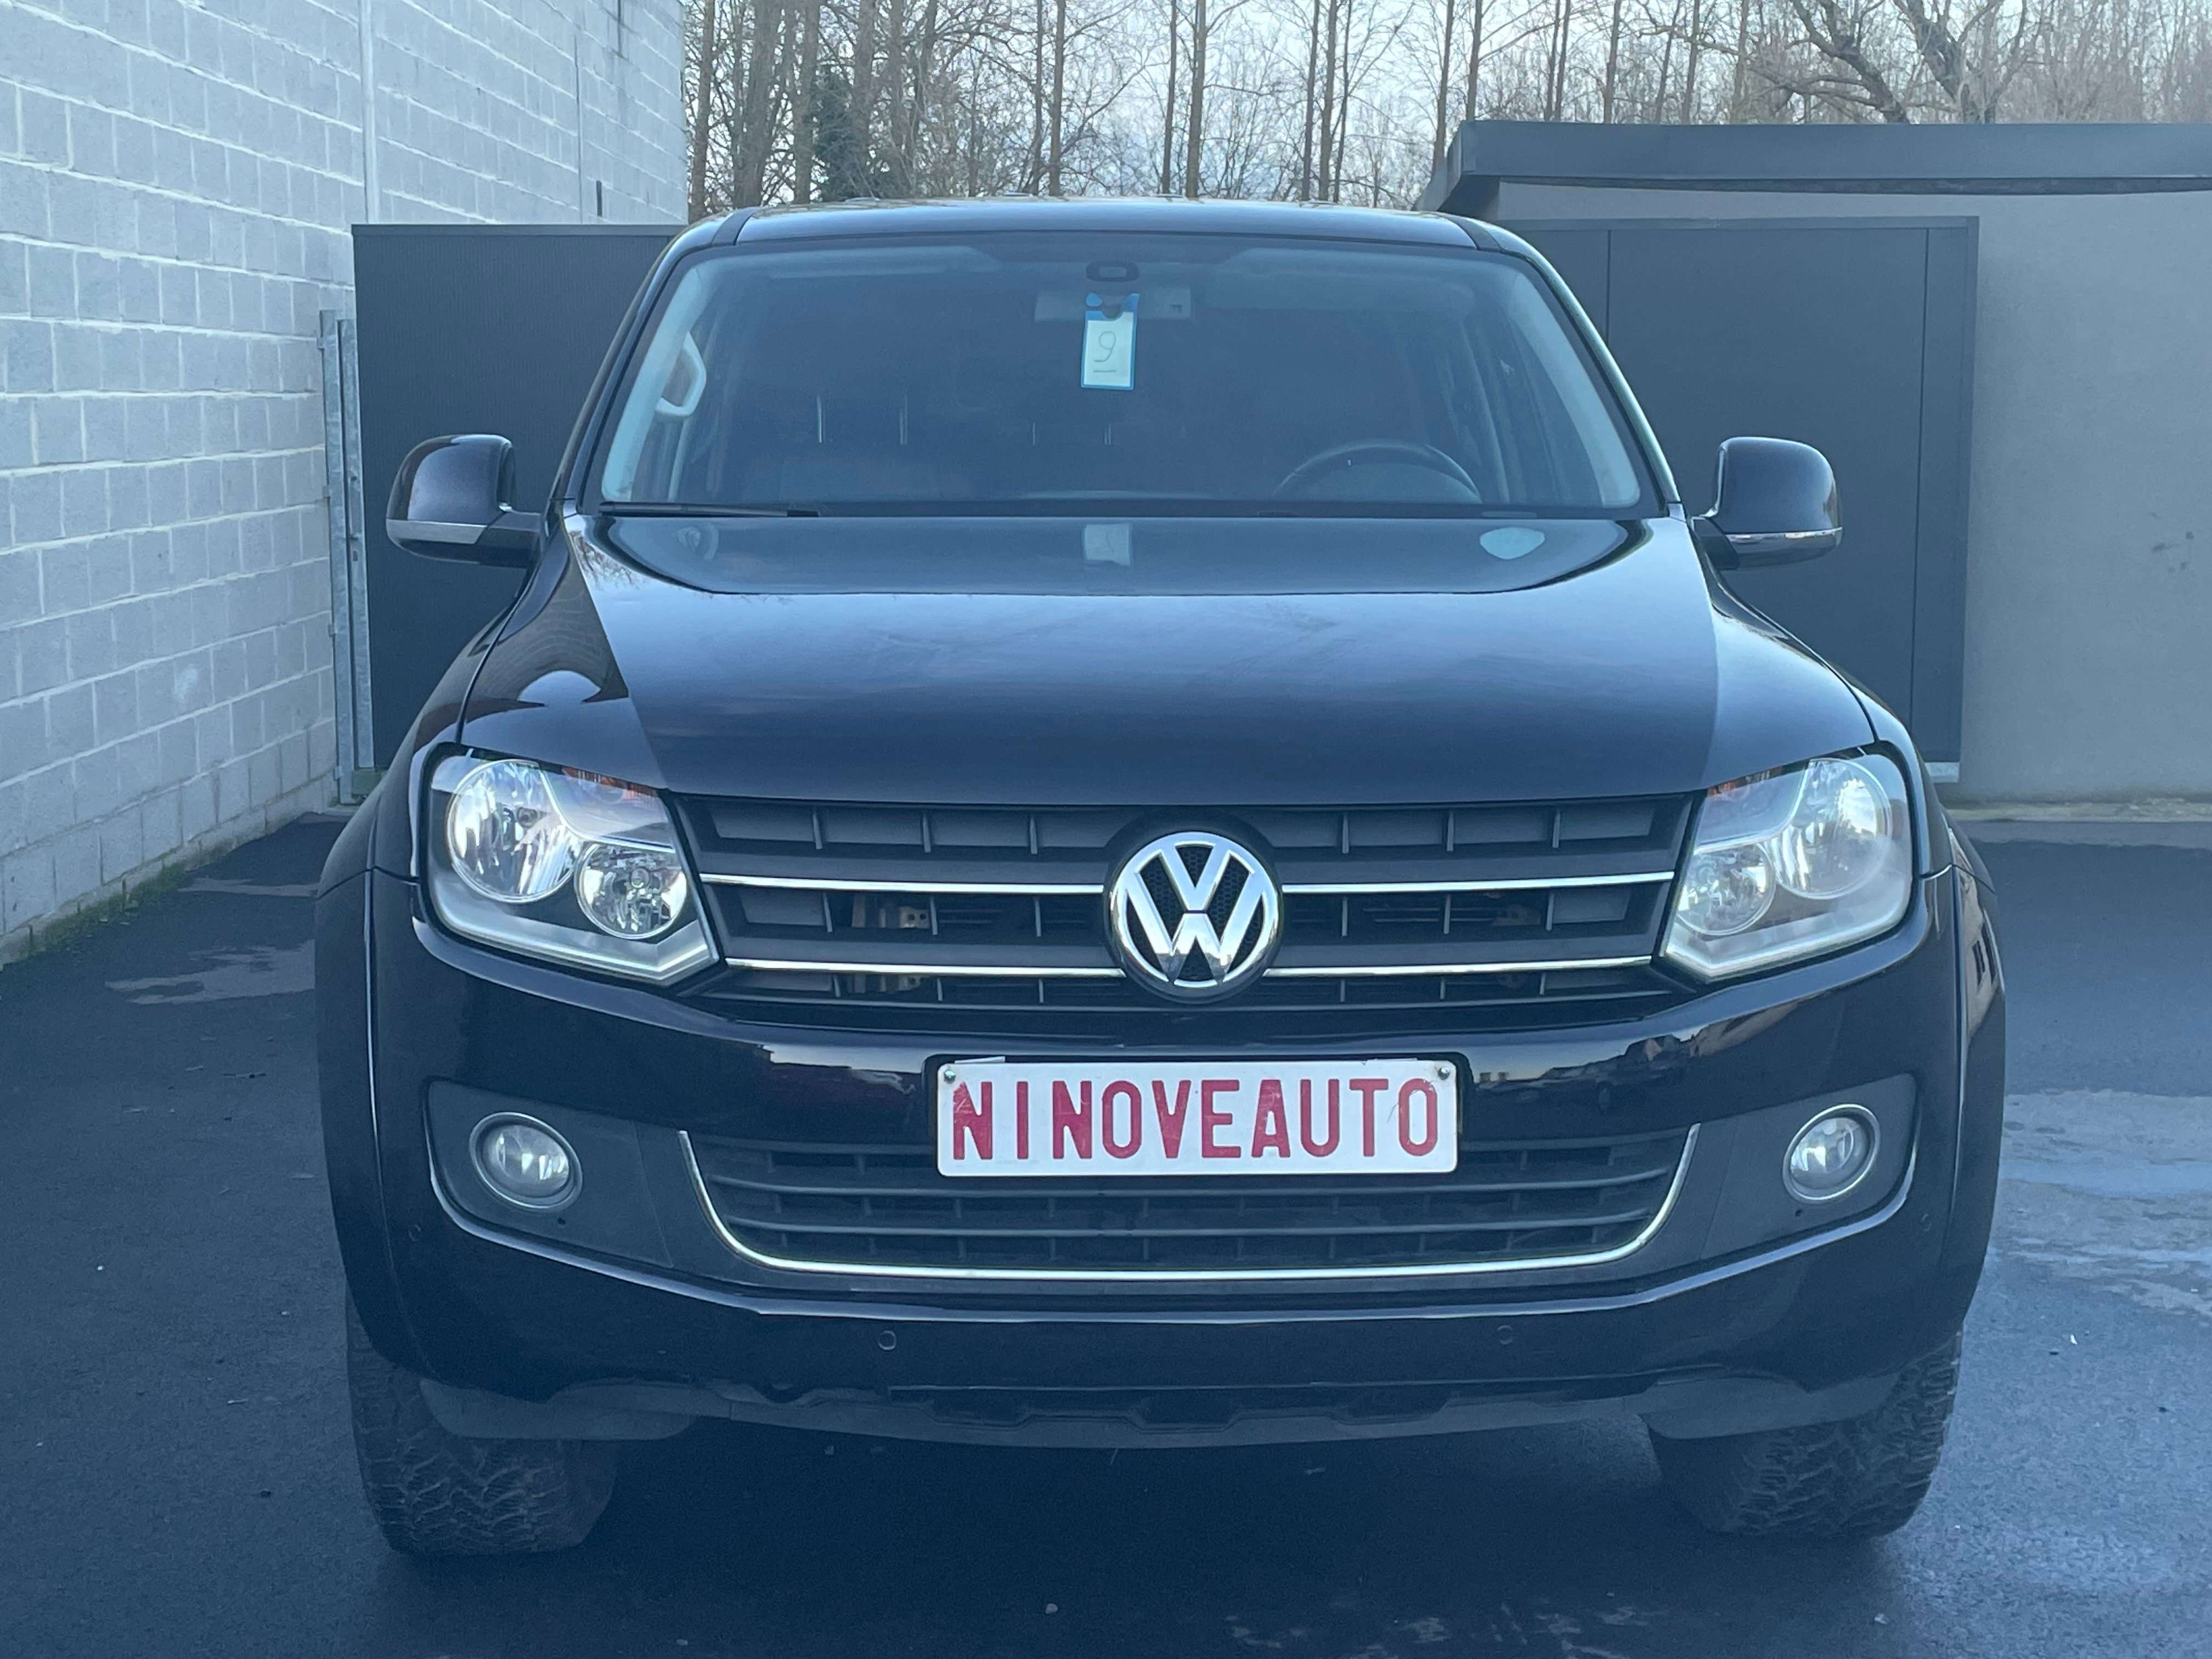 Ninove auto - Volkswagen Amarok